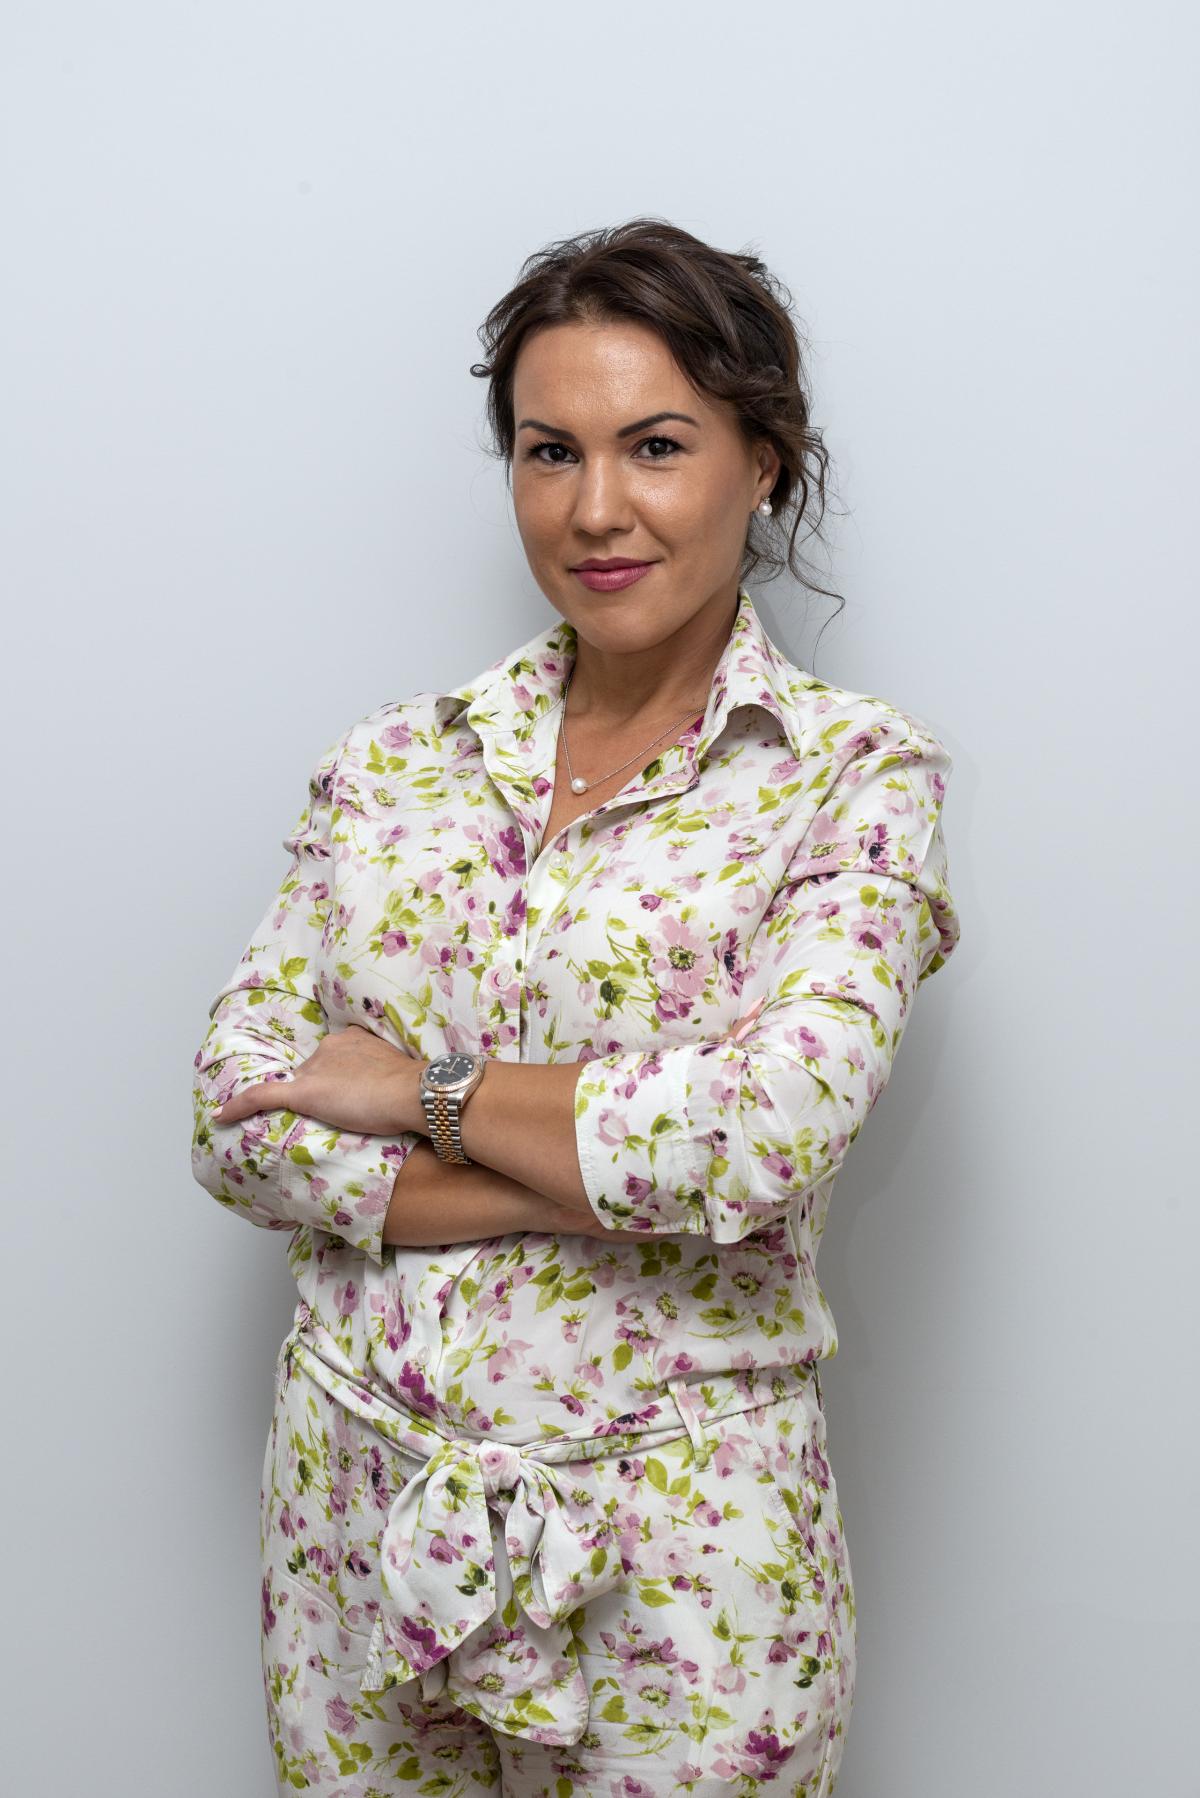 Bisera Milanova - A new consultant at Unique Estates 